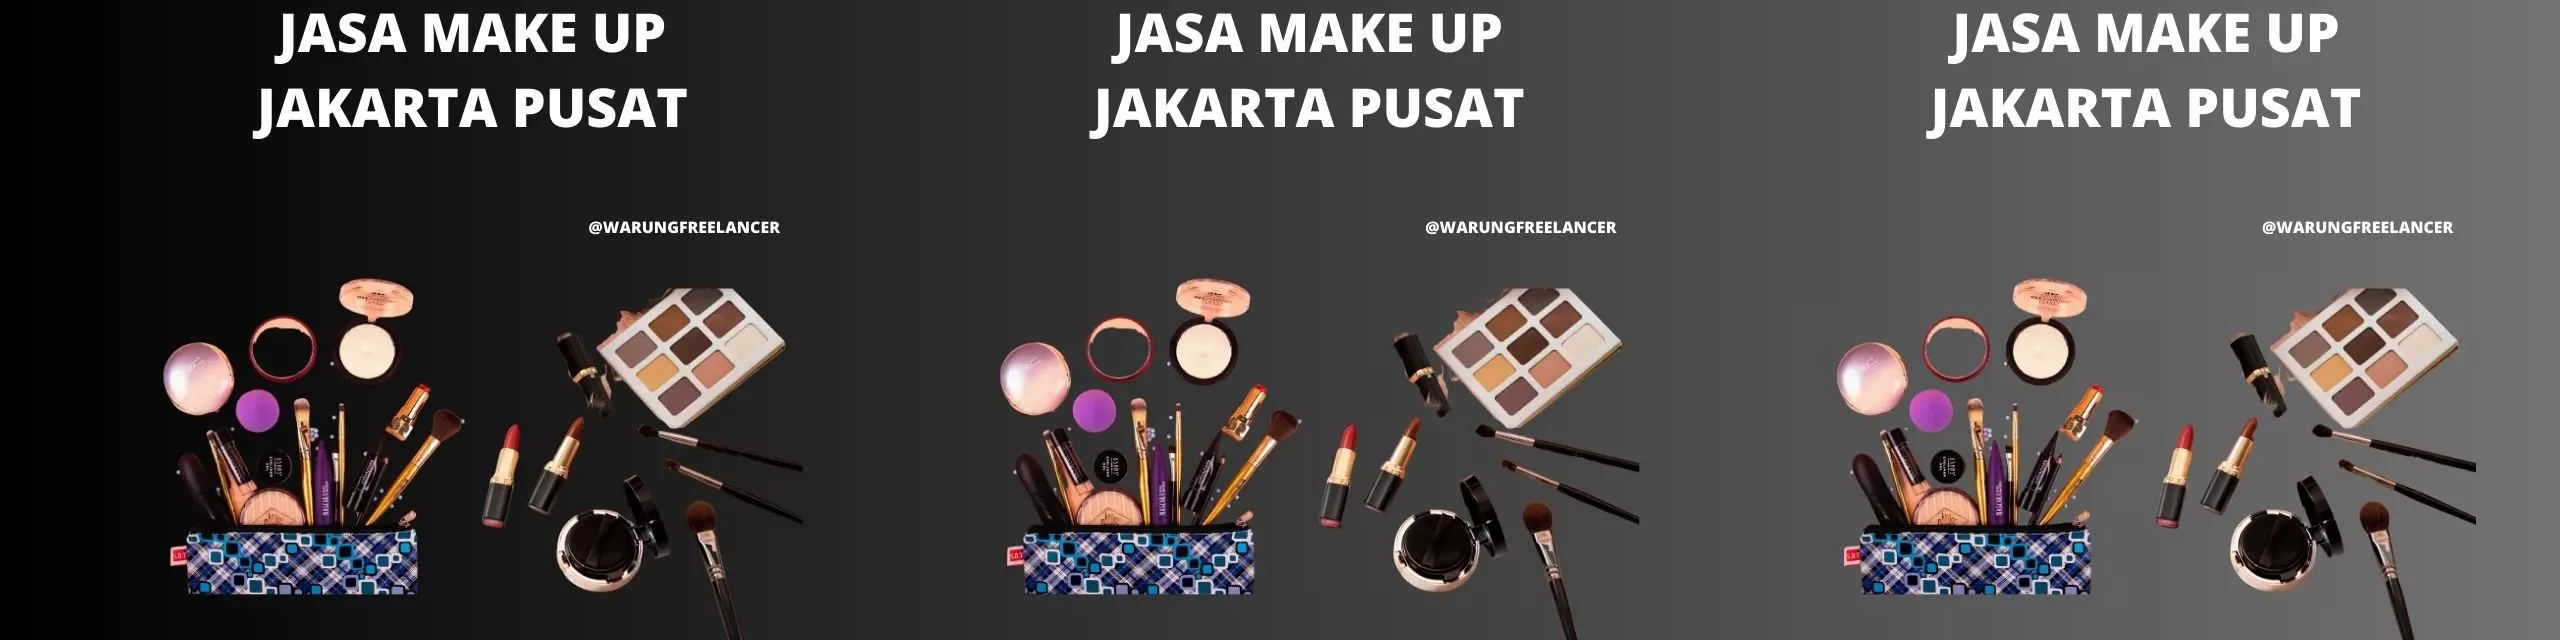 Jasa Make Up Jakarta Pusat